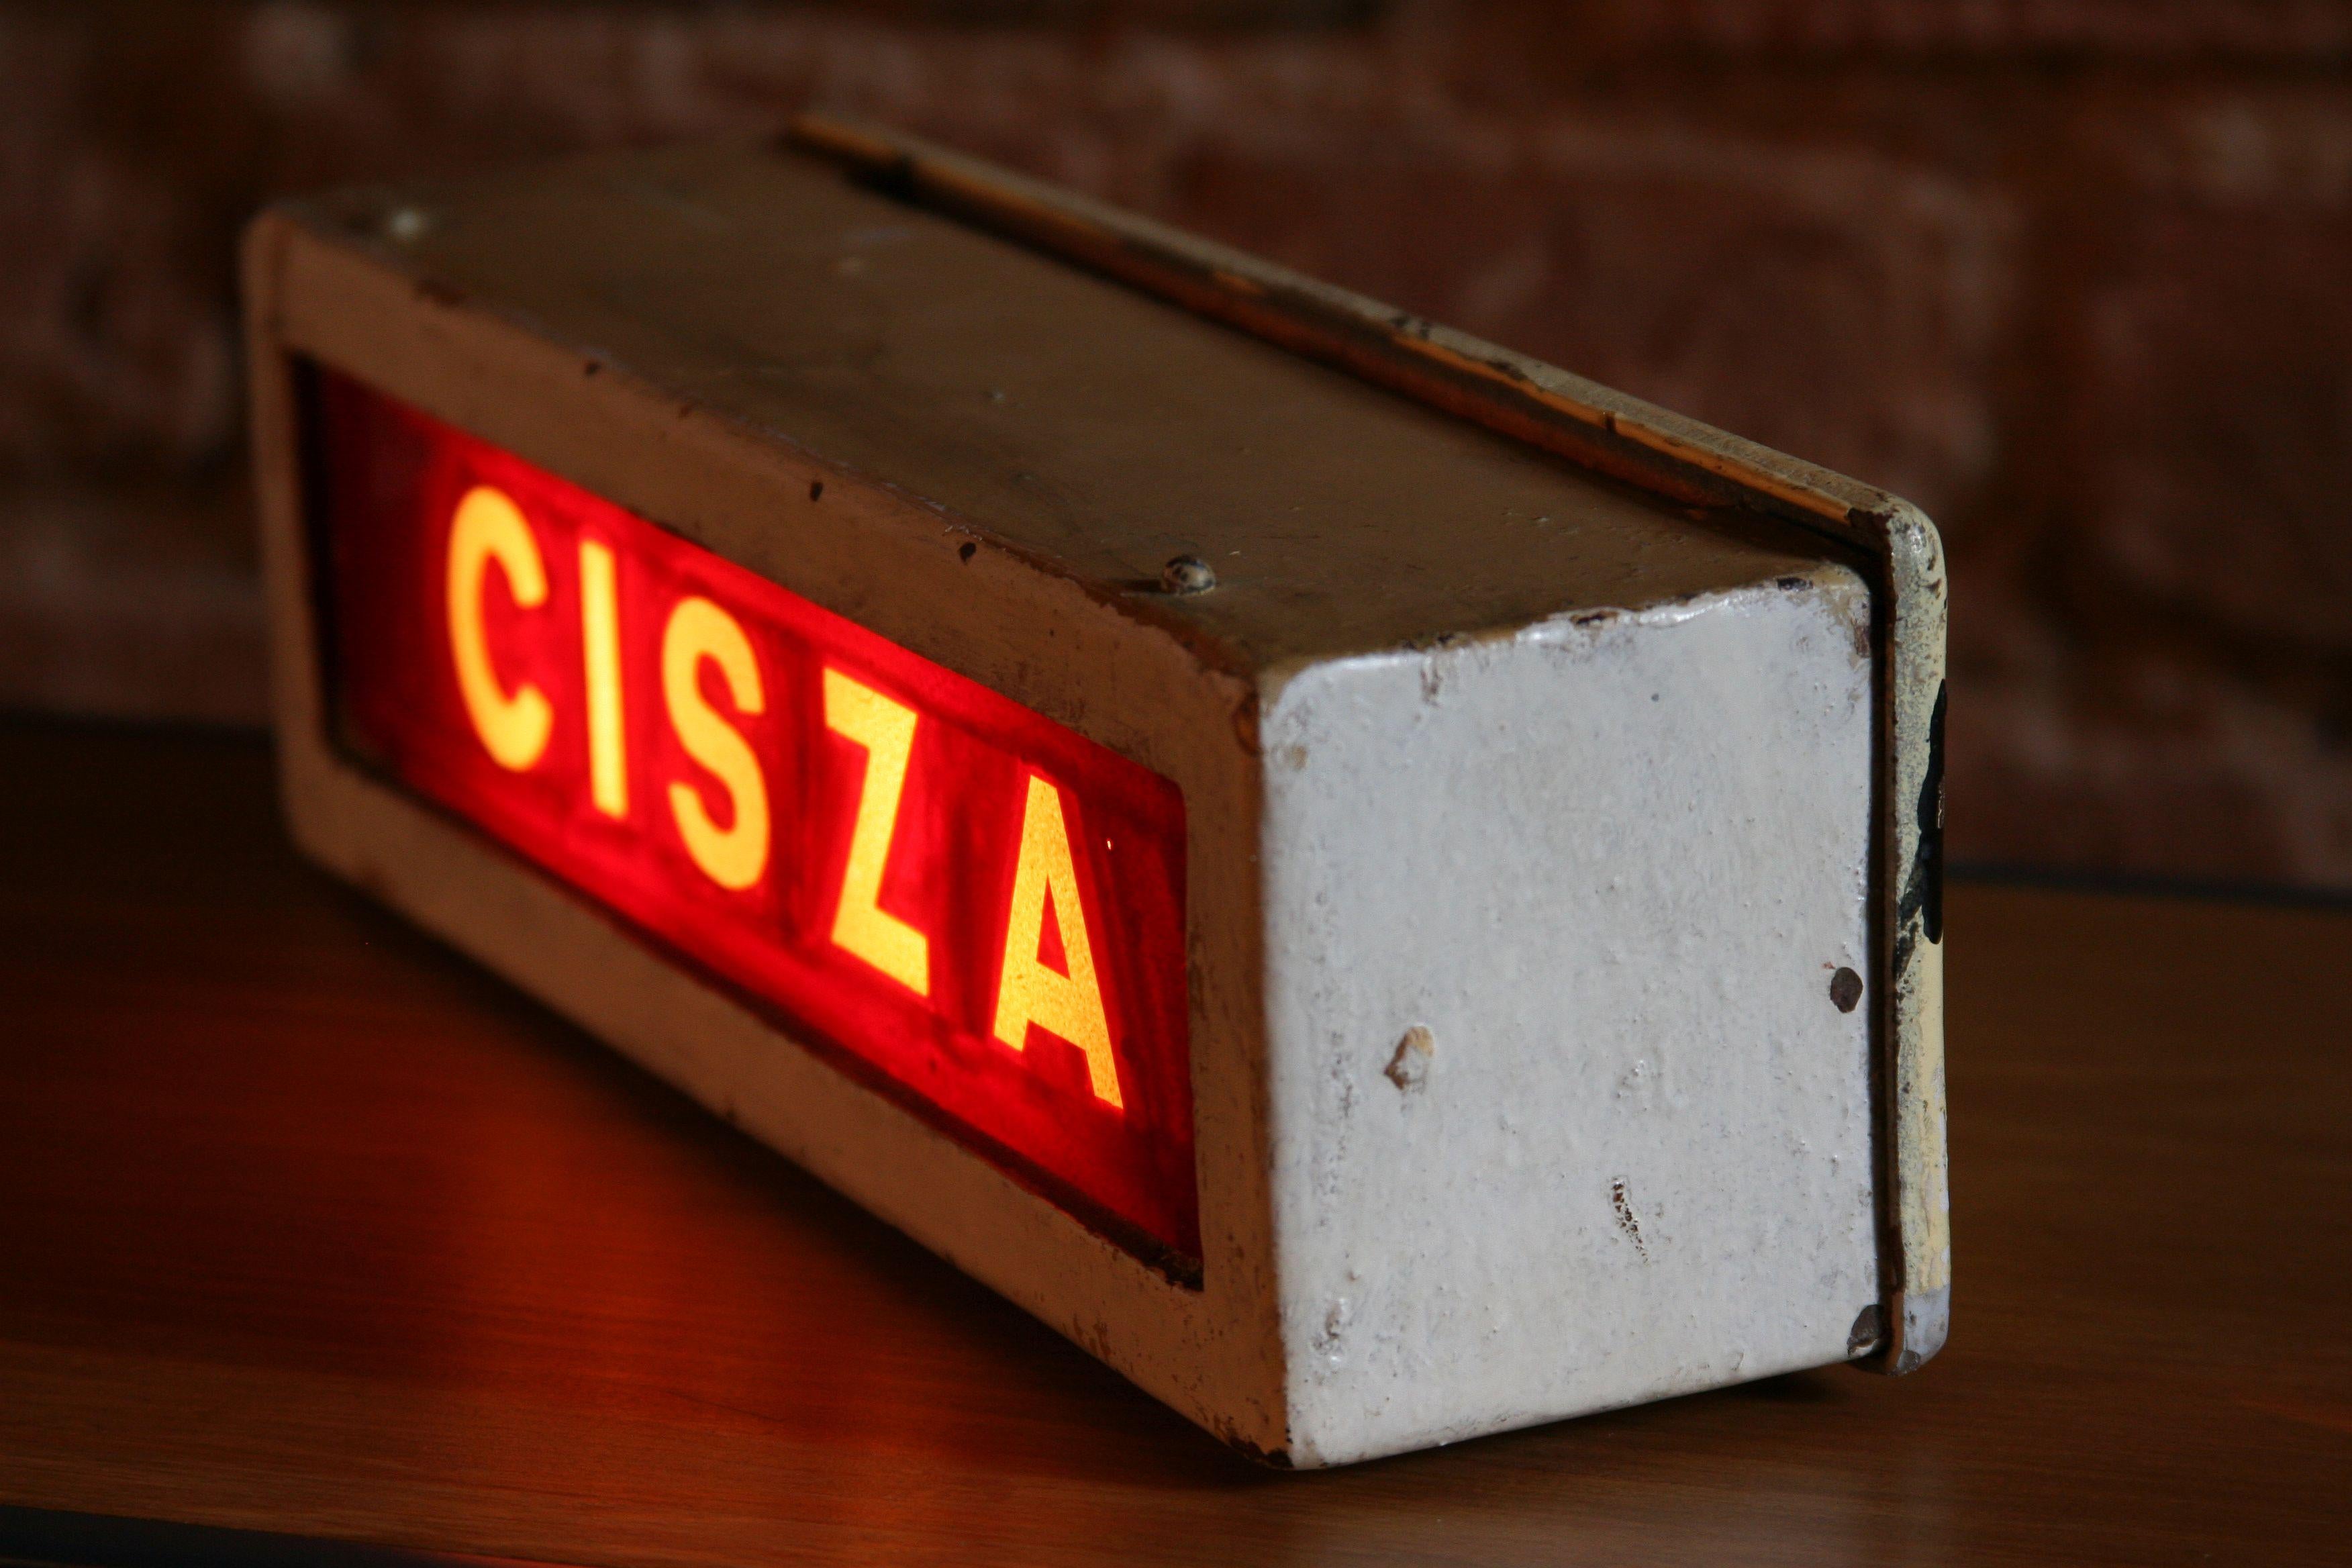 Polish 1950s Illuminated Theater Sign “CISZA”, Meaning “Silence”